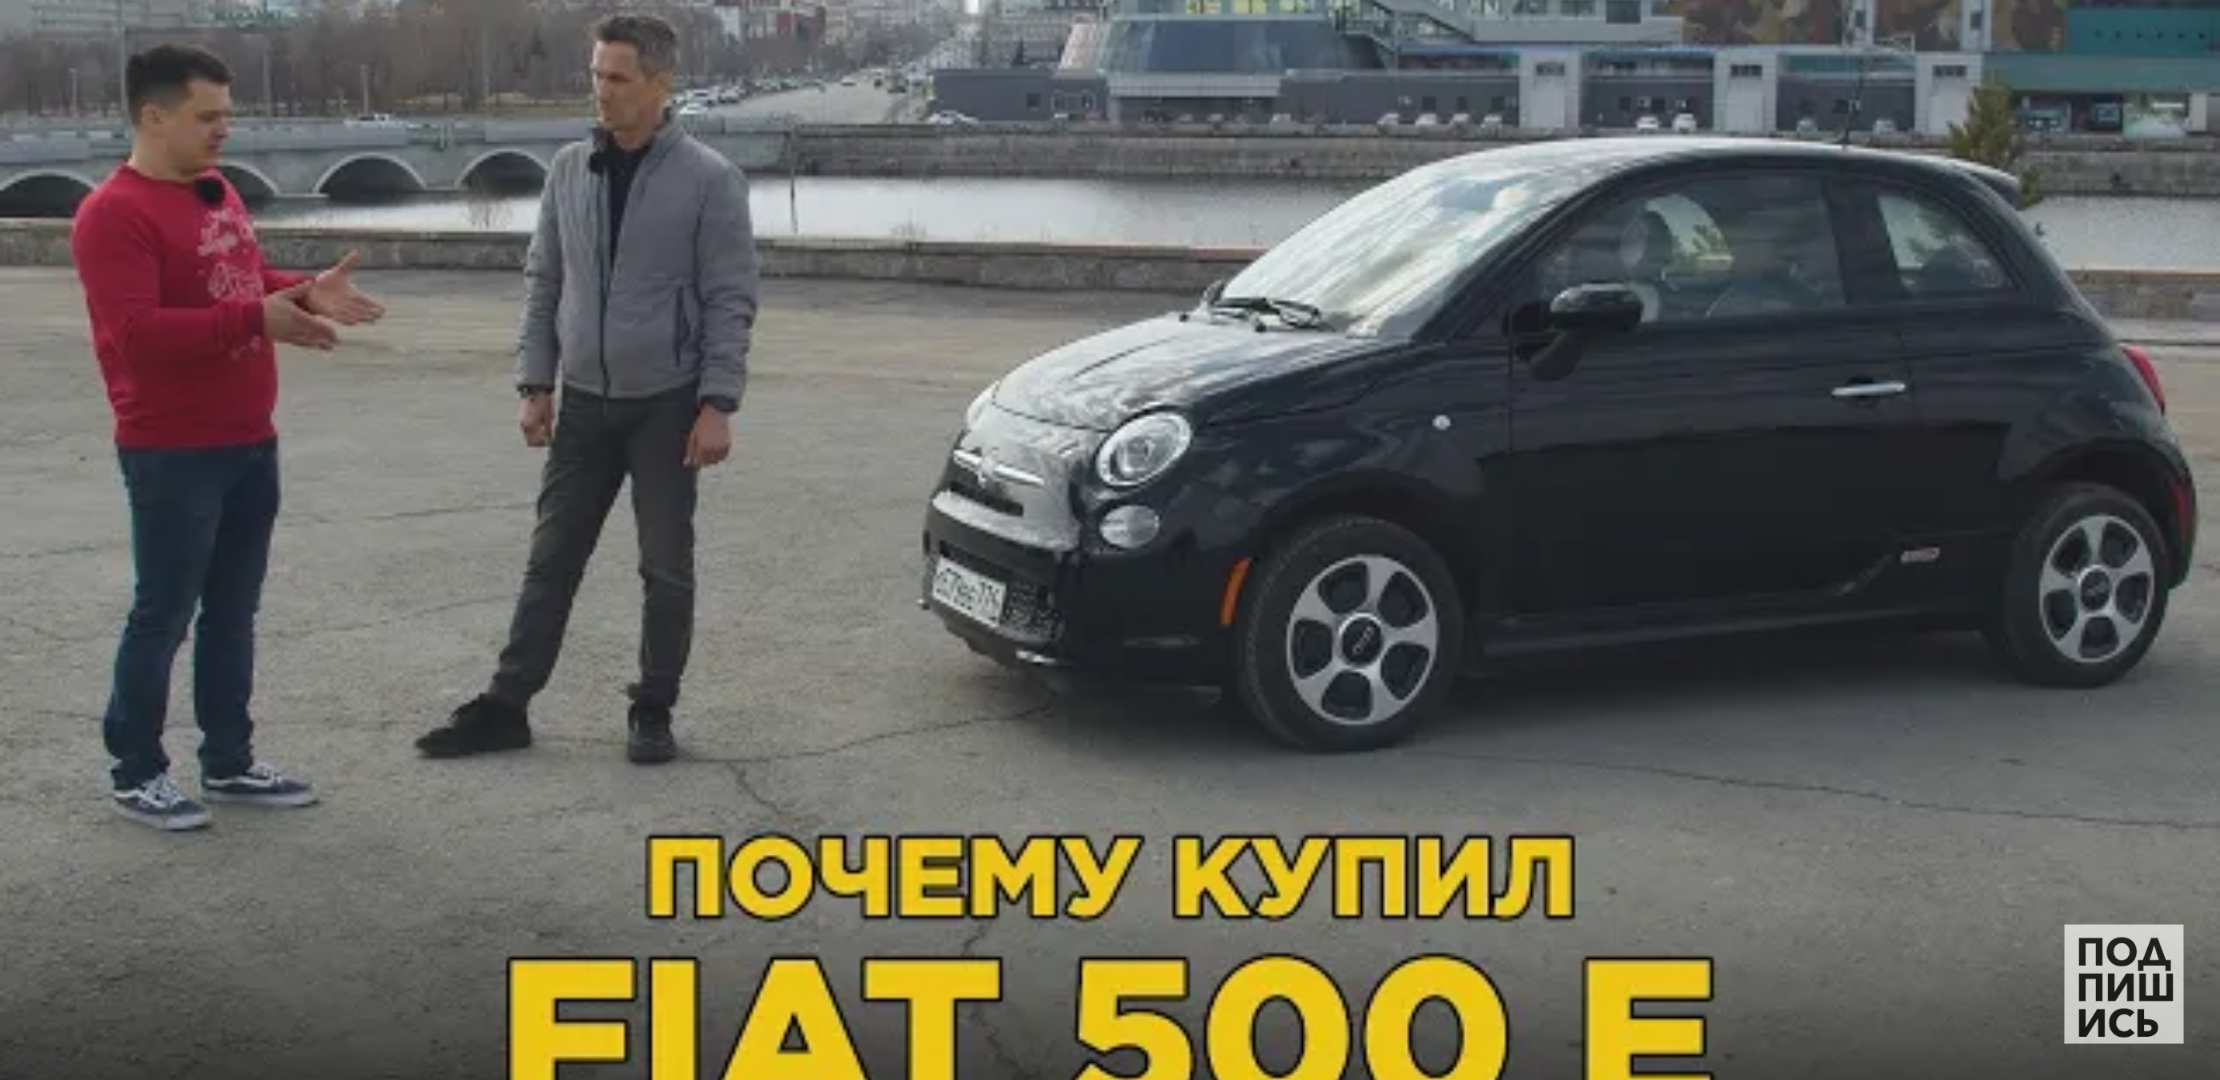 Анонс видео-теста Почему купил Fiat 500 E. Отзыв владельца Фиат 500 Е. 